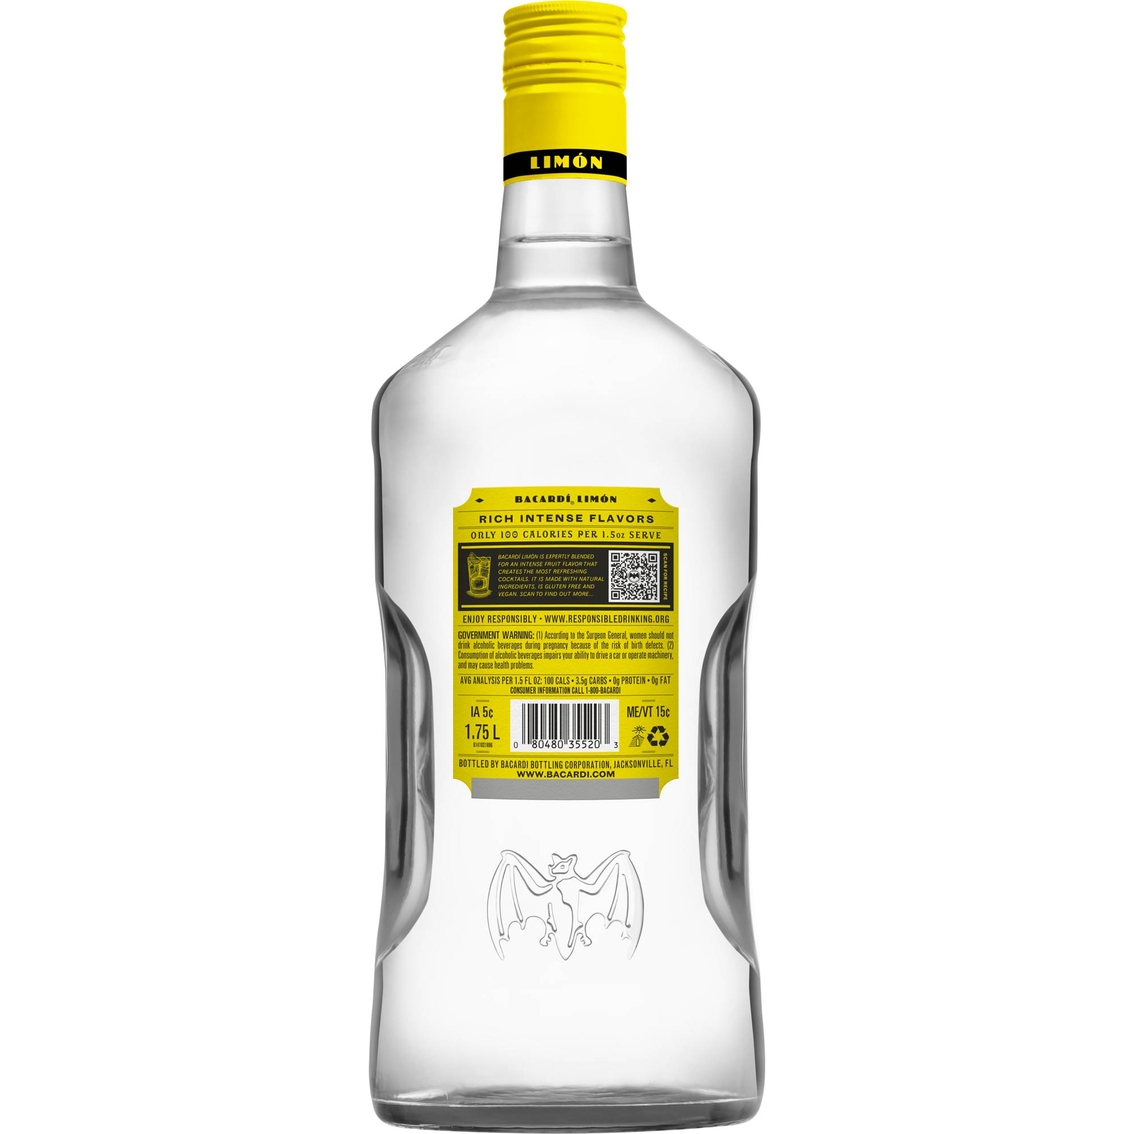 Bacardi Limon Rum 1.75L - Image 2 of 2